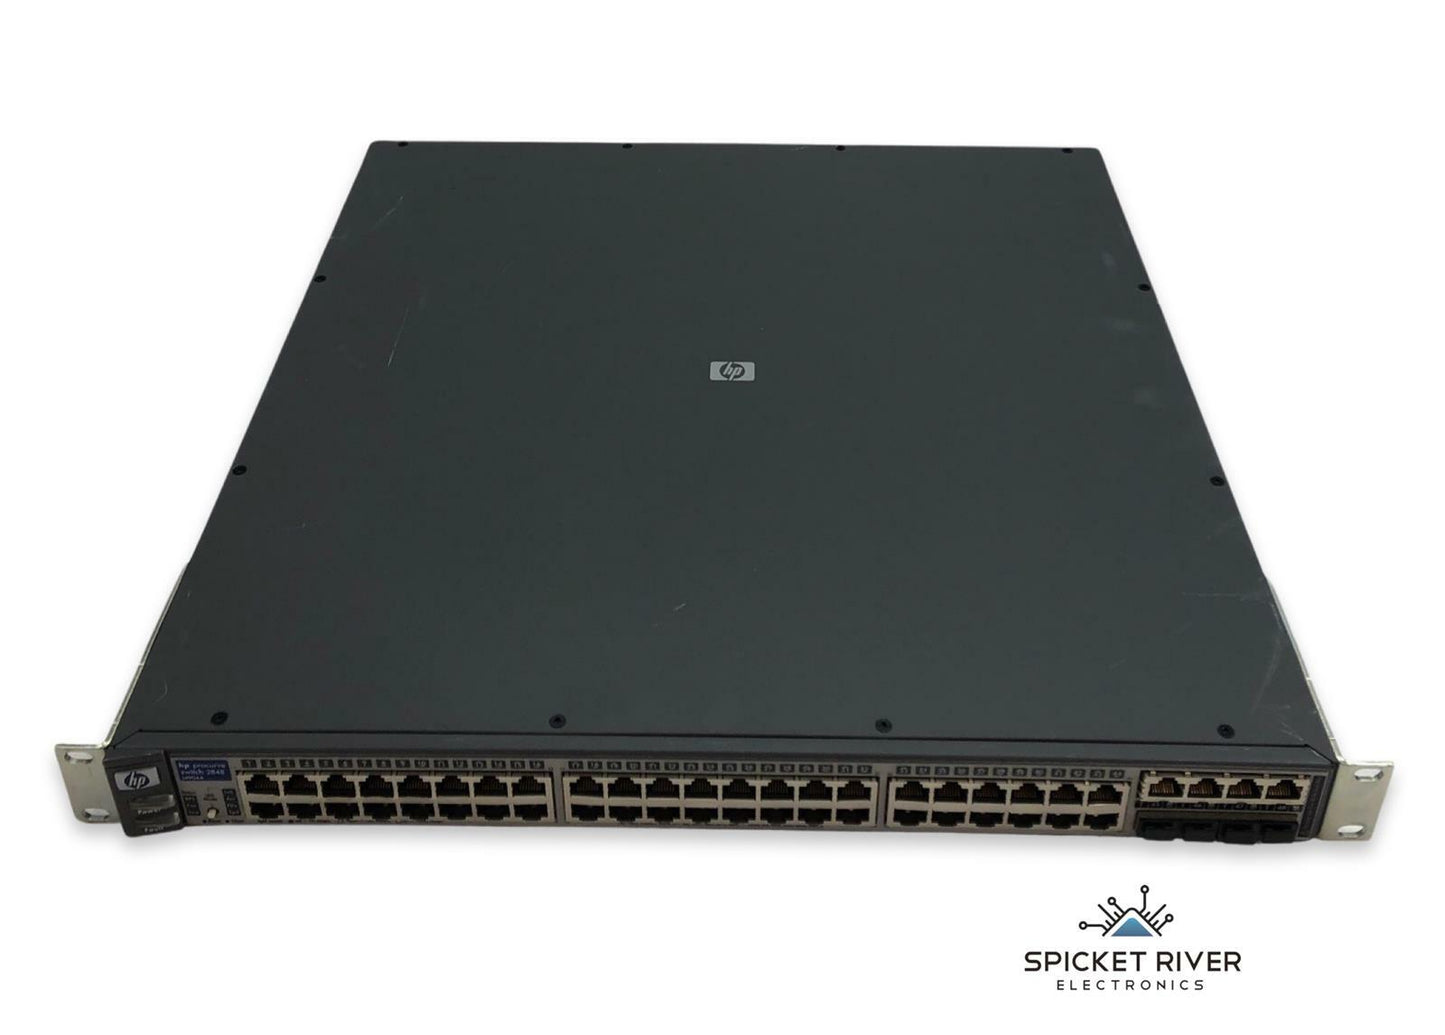 HP ProCurve 2848 J4904A 48-Port Gigabit Ethernet Network Switch